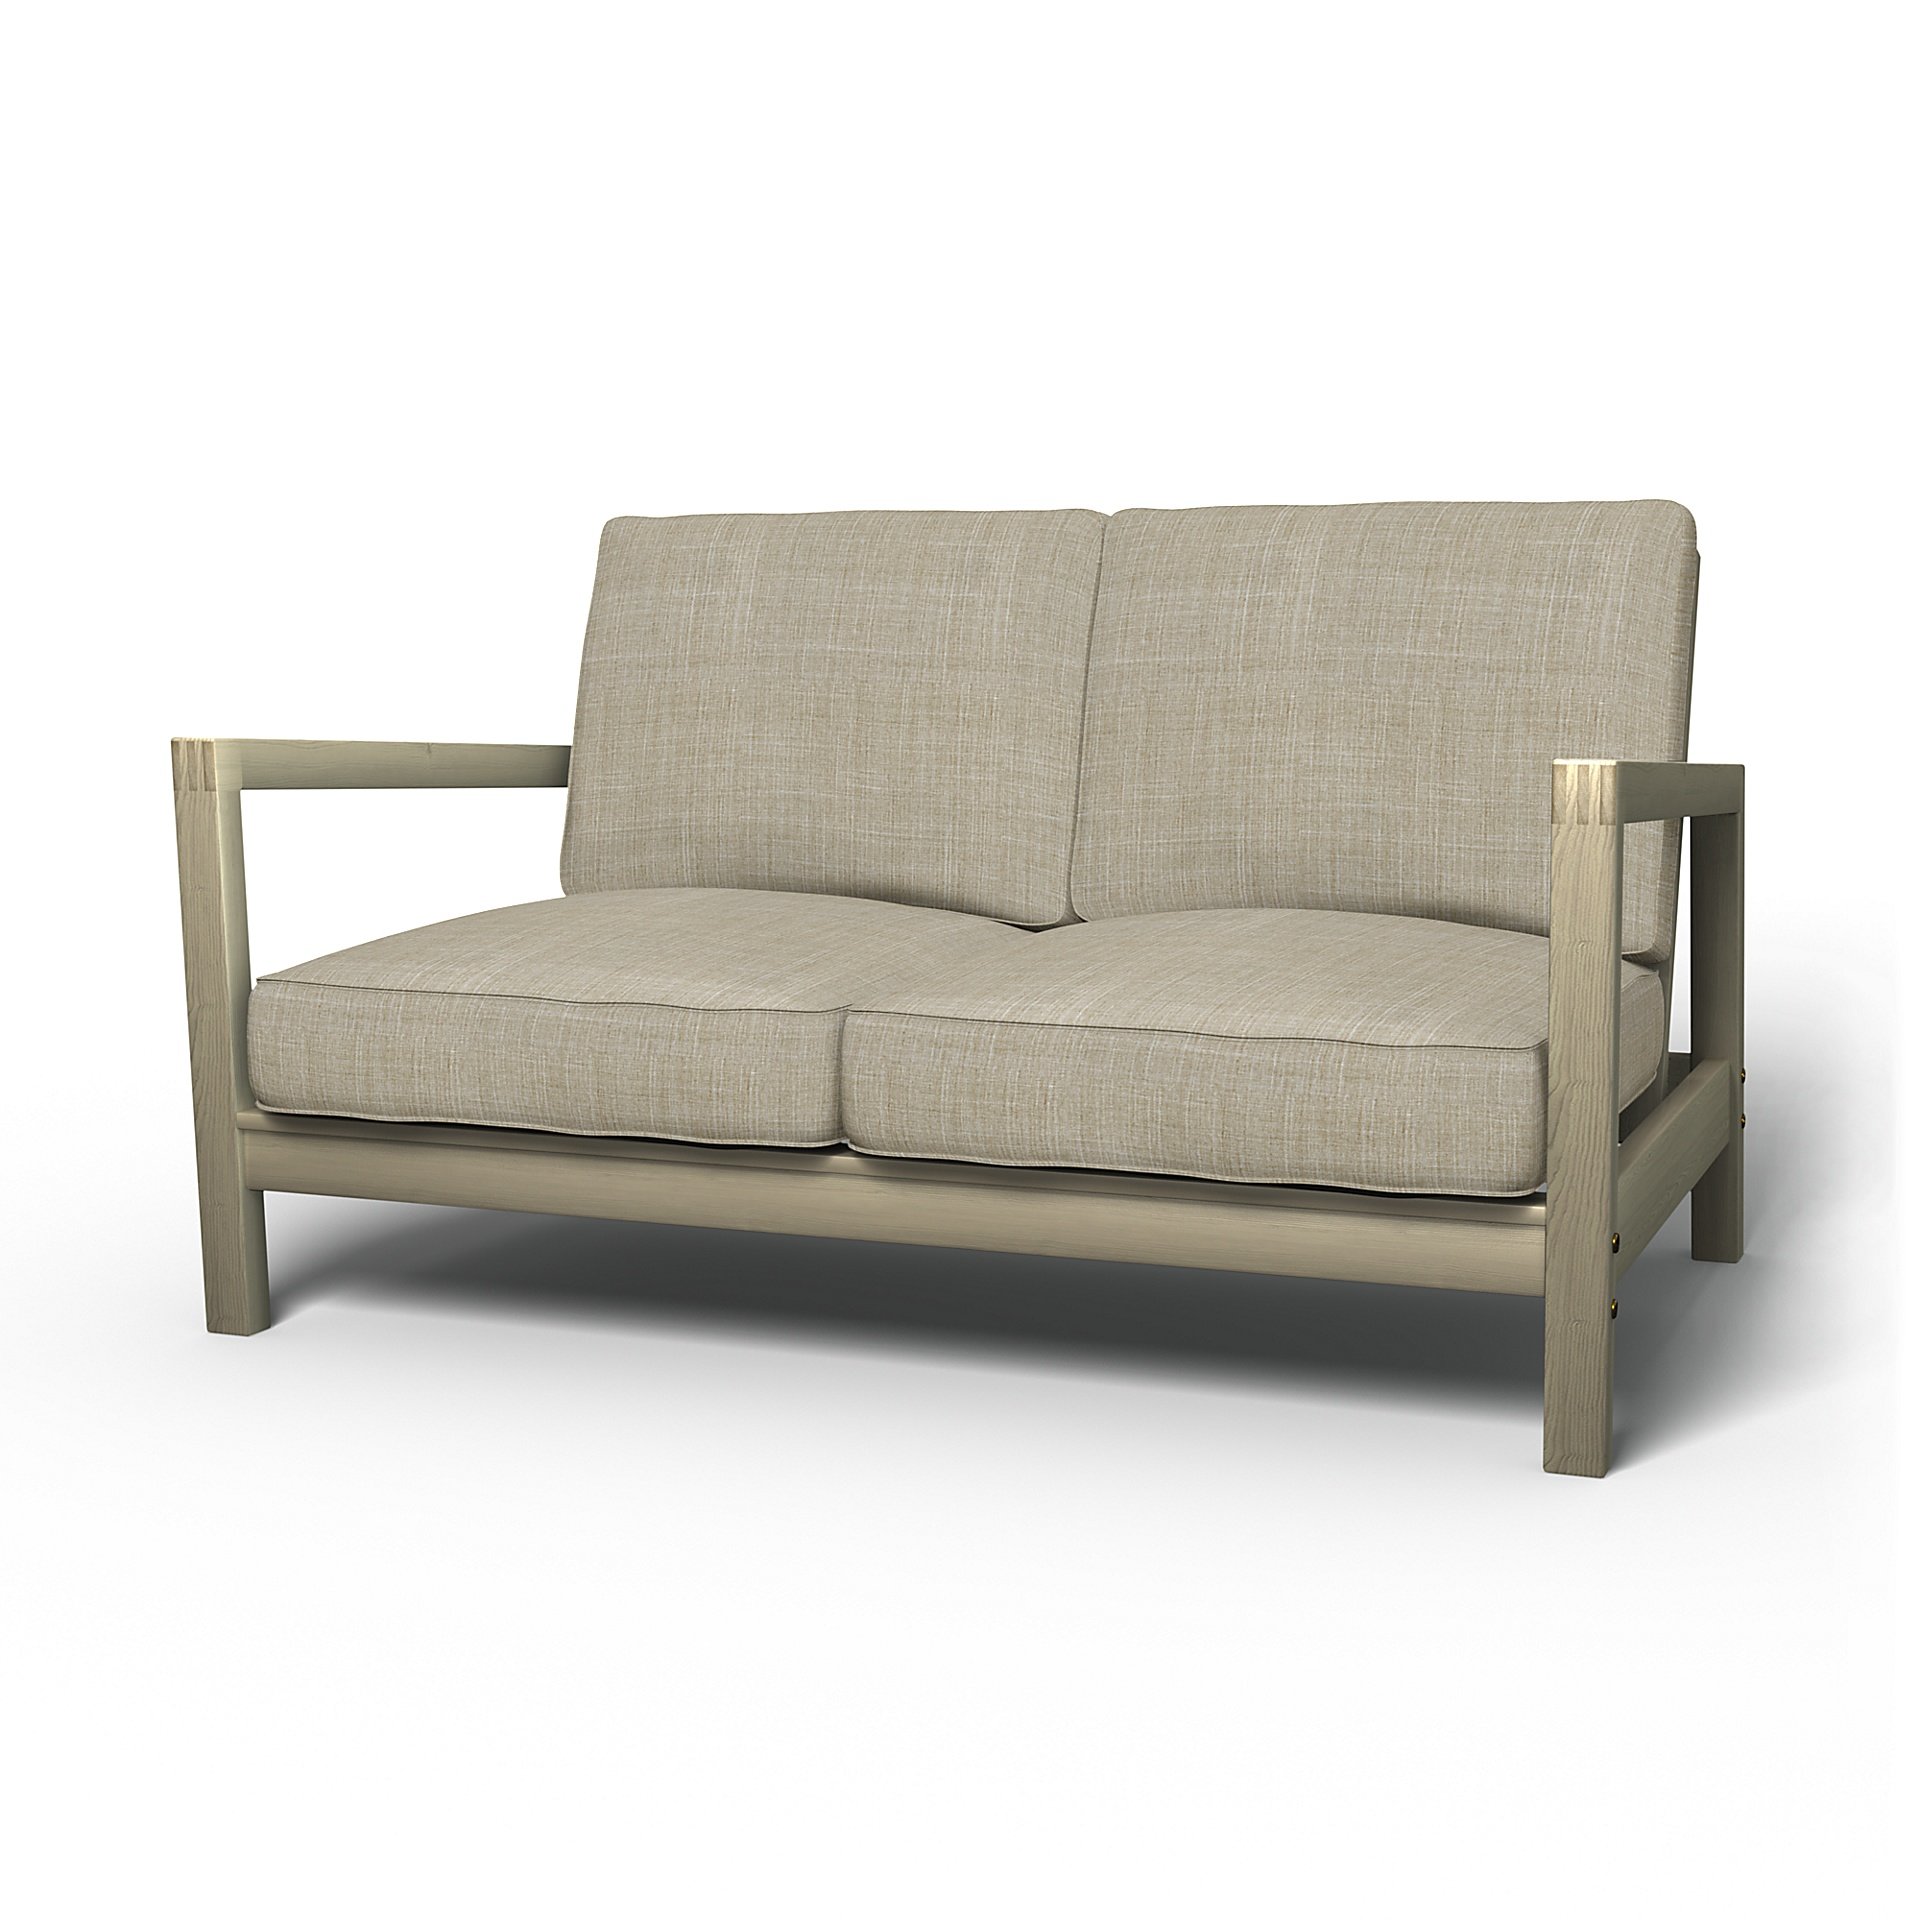 IKEA - Lillberg 2 Seater Sofa Cover, Sand Beige, Boucle & Texture - Bemz